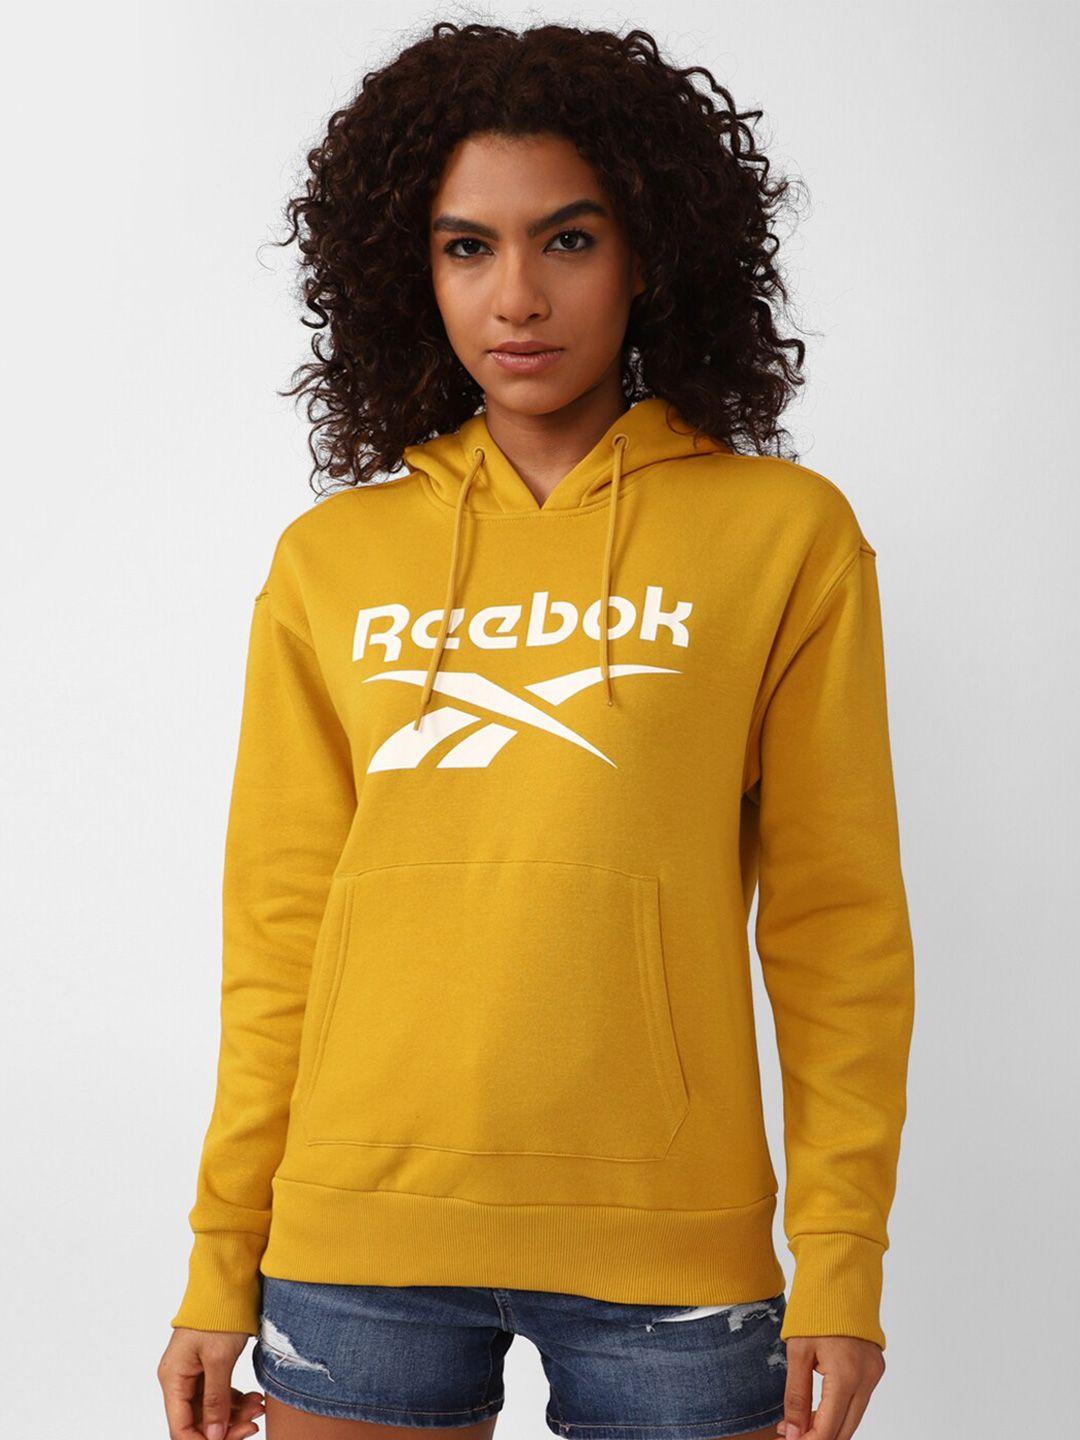 reebok women rbk fitness ri bl hooded sweatshirts